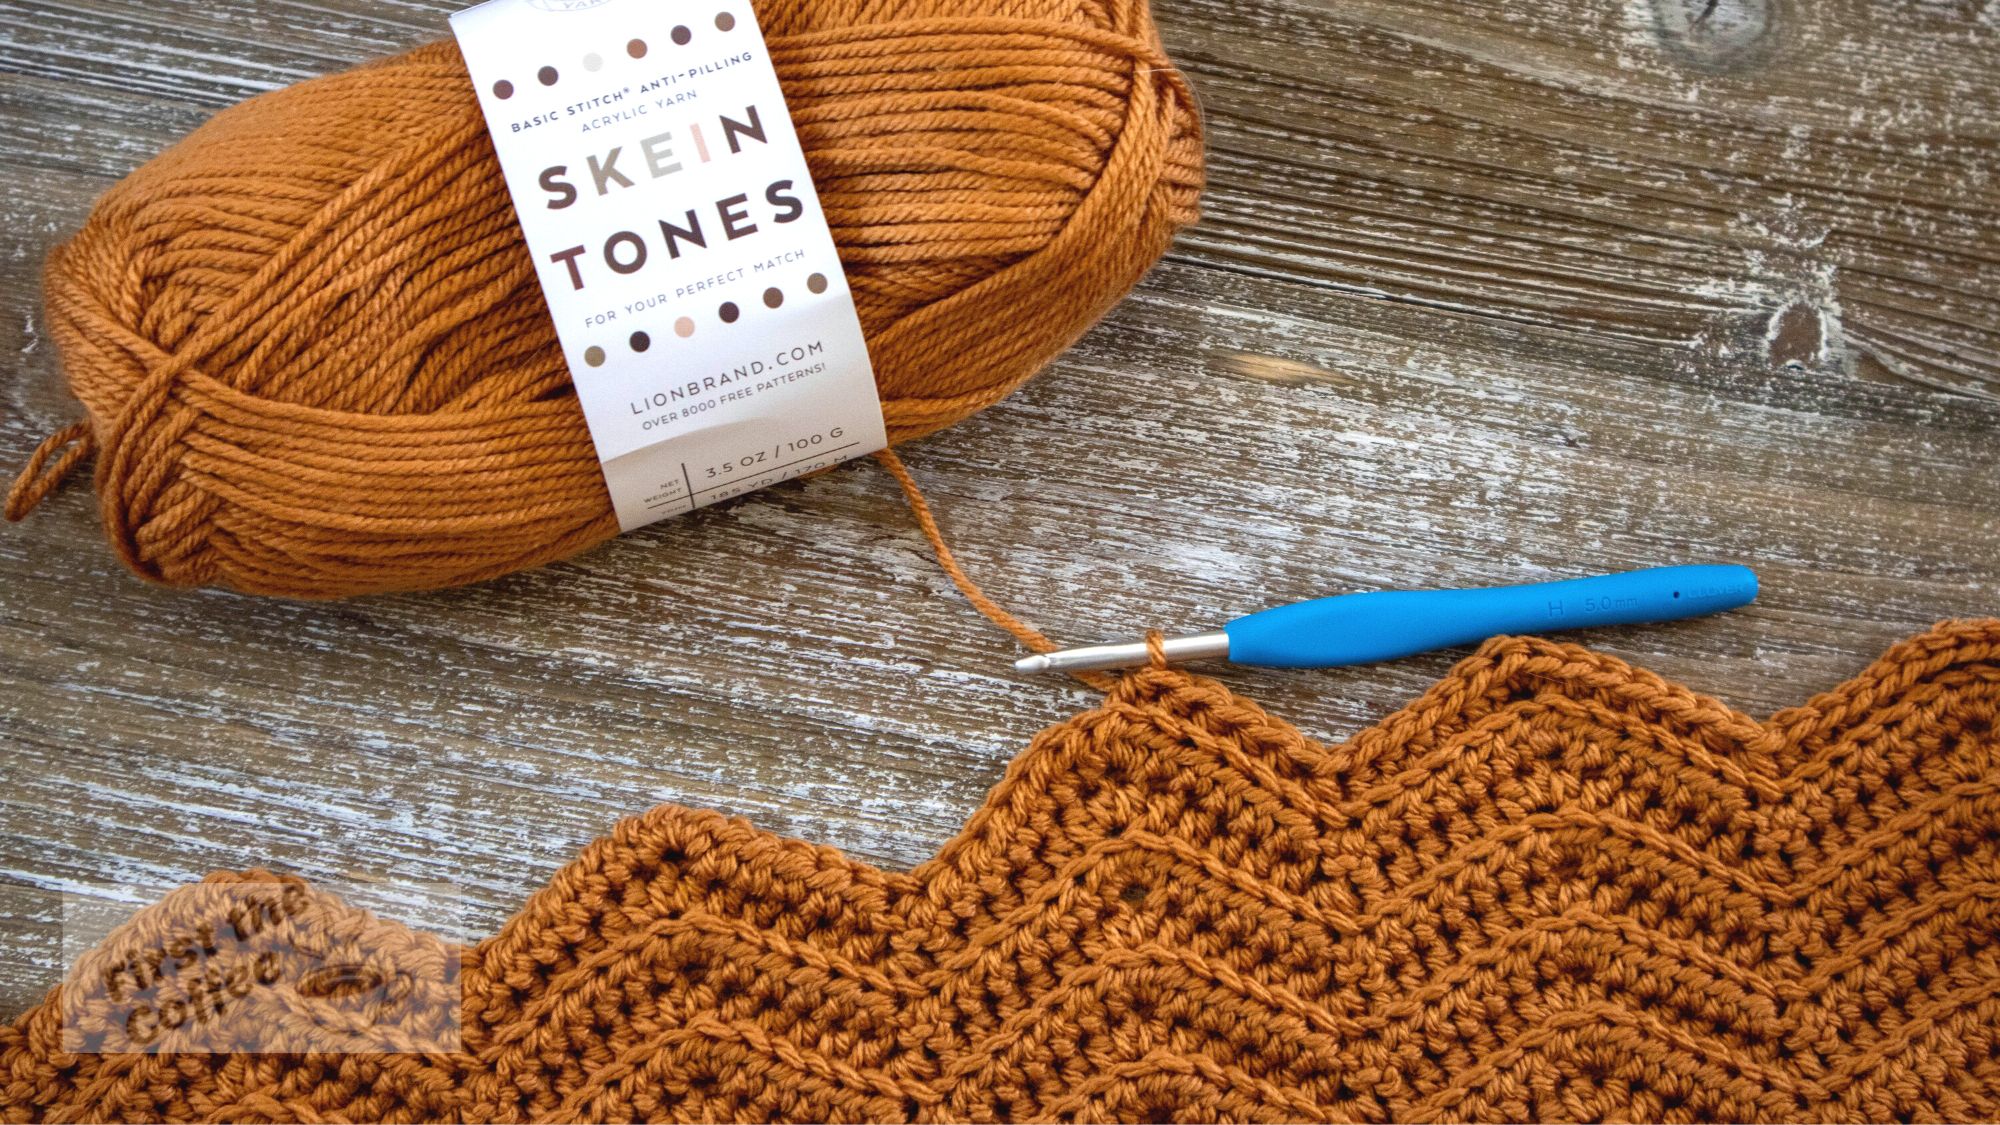 Lion Brand Basic Stitch Skein Tones Yarn used in making the Zig Zag Crochet Scarf.